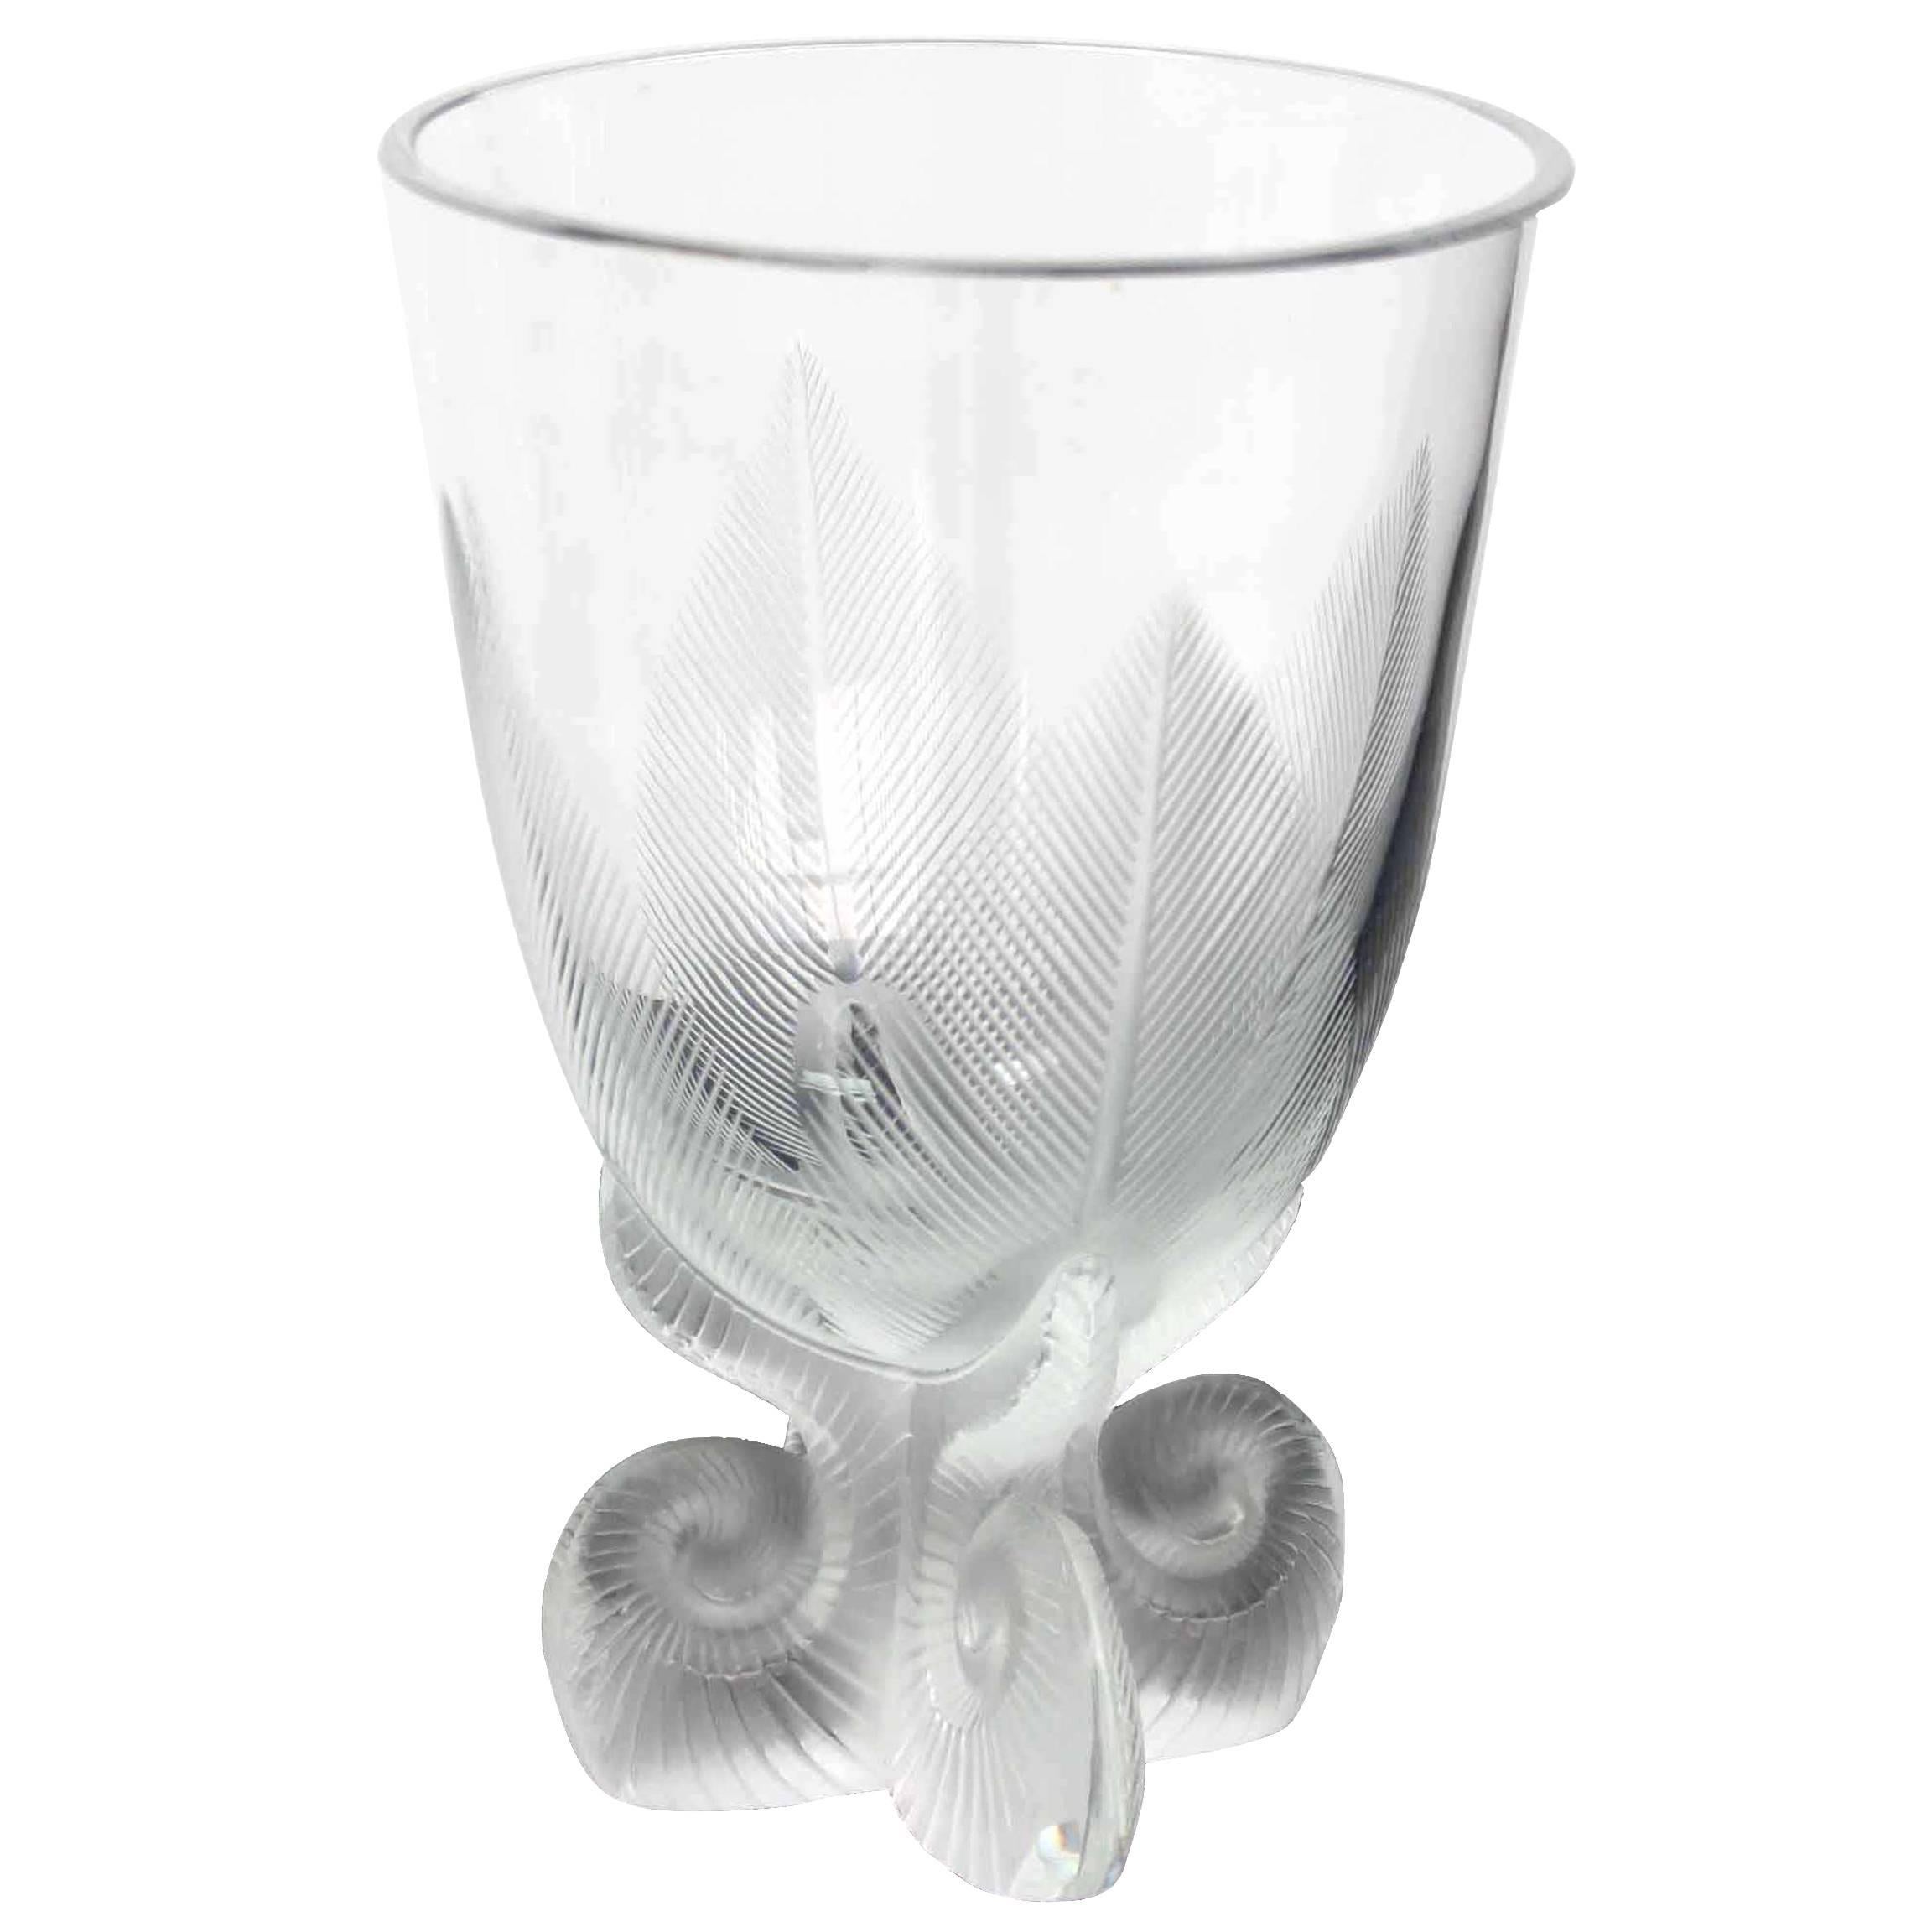 Signed Lalique Glass Vase For Sale